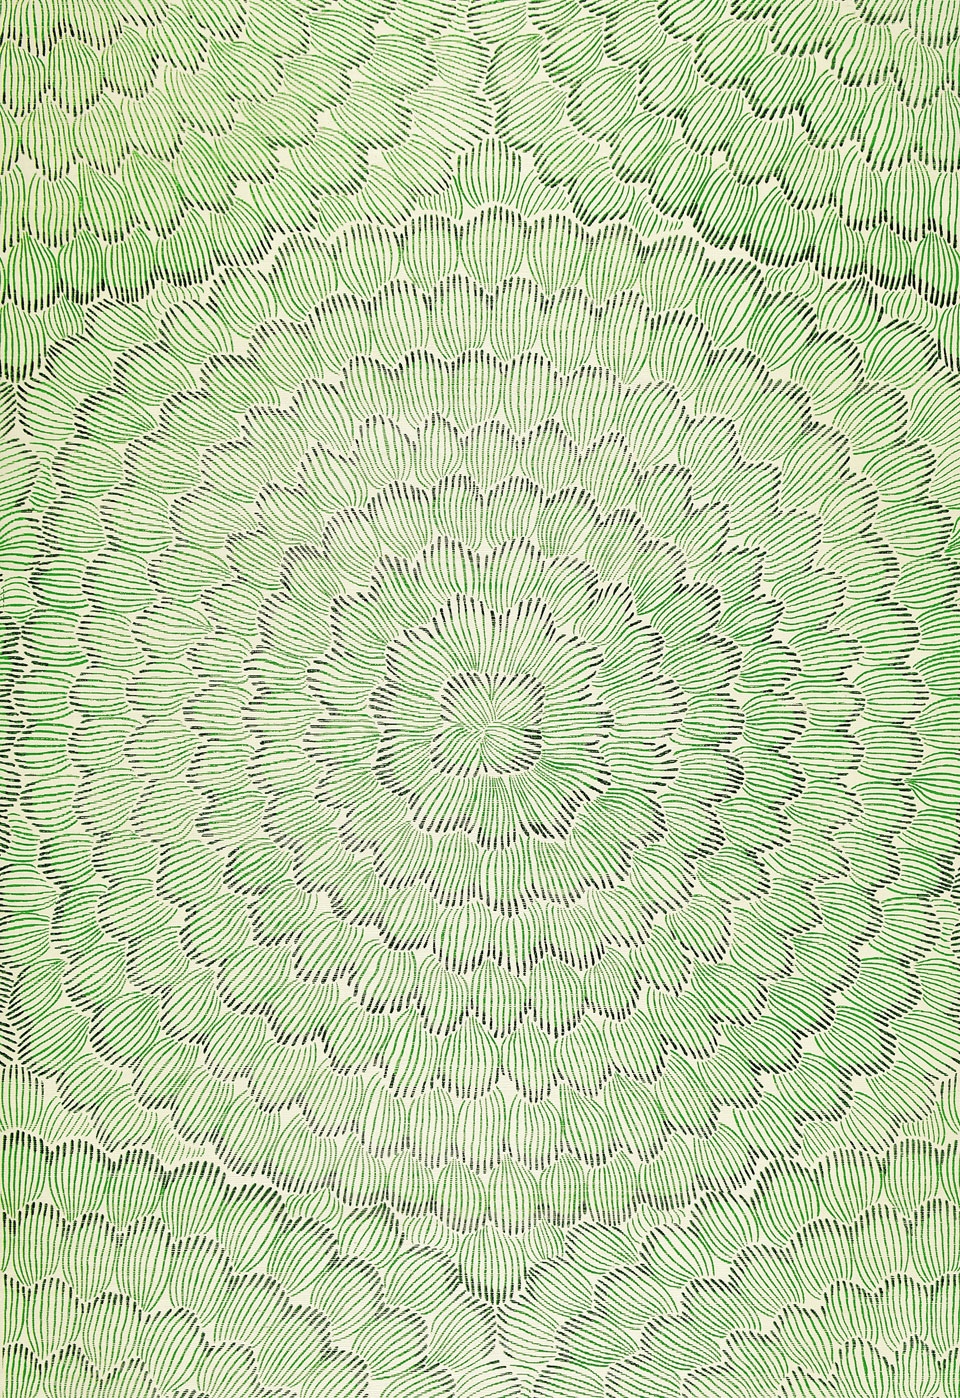 Celerie Kemble Feather Bloom Emerald Ore Wallpaper